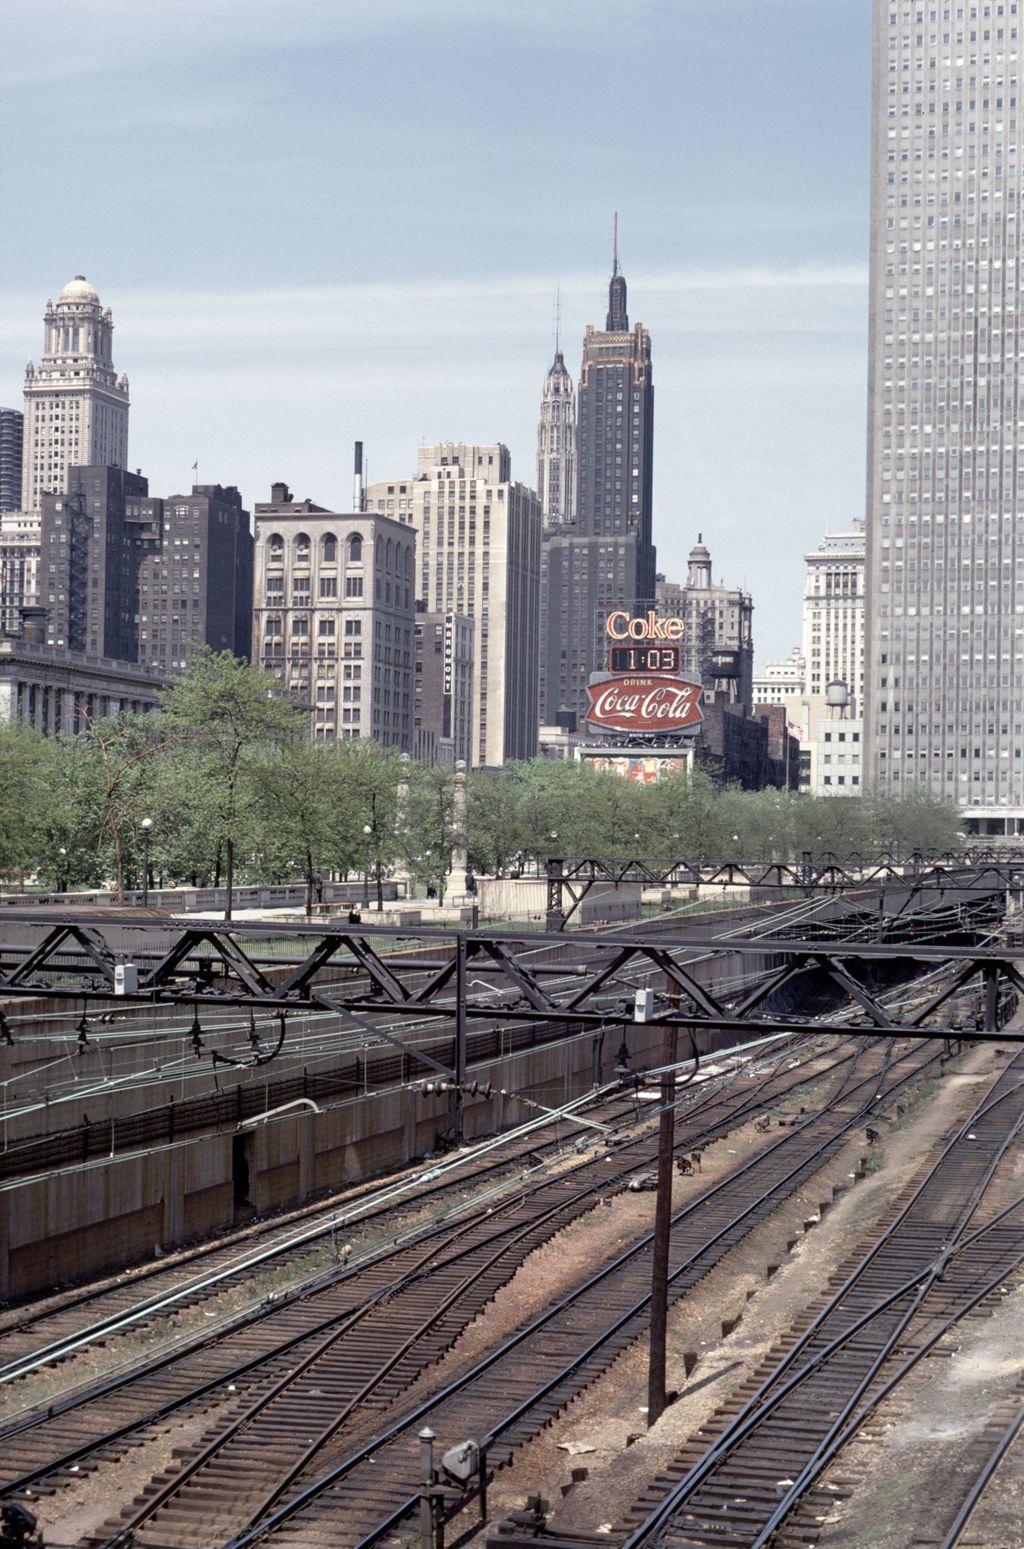 Miniature of Loop skyline from Grant Park railroad yards